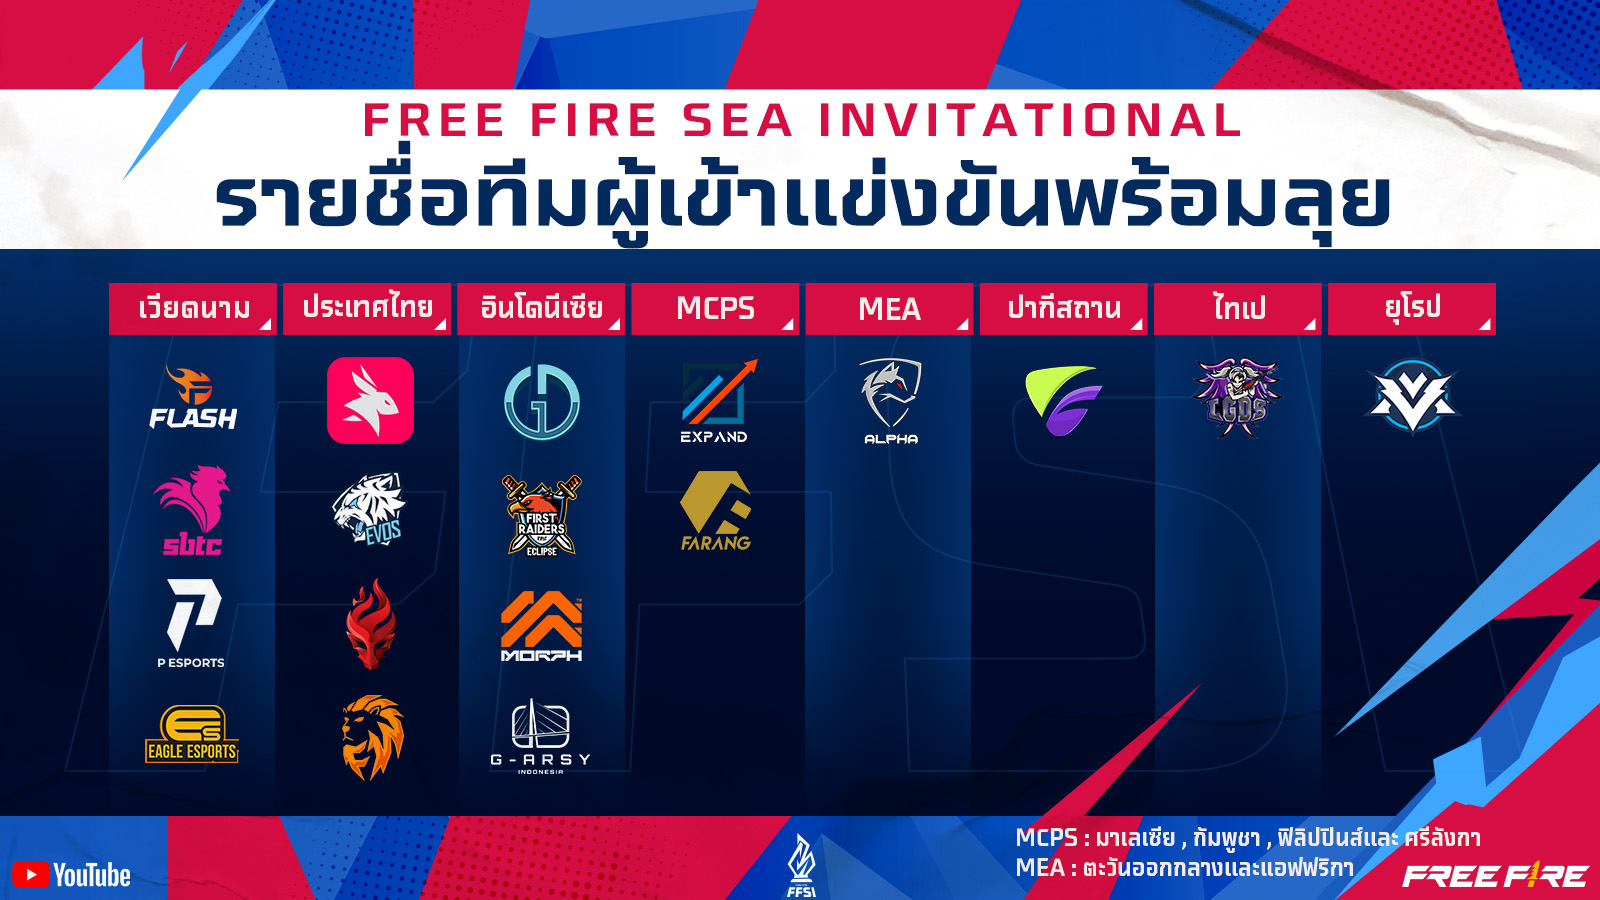 Free Fire SEA Invitationals - FFSI KV 2 - ภาพที่ 3